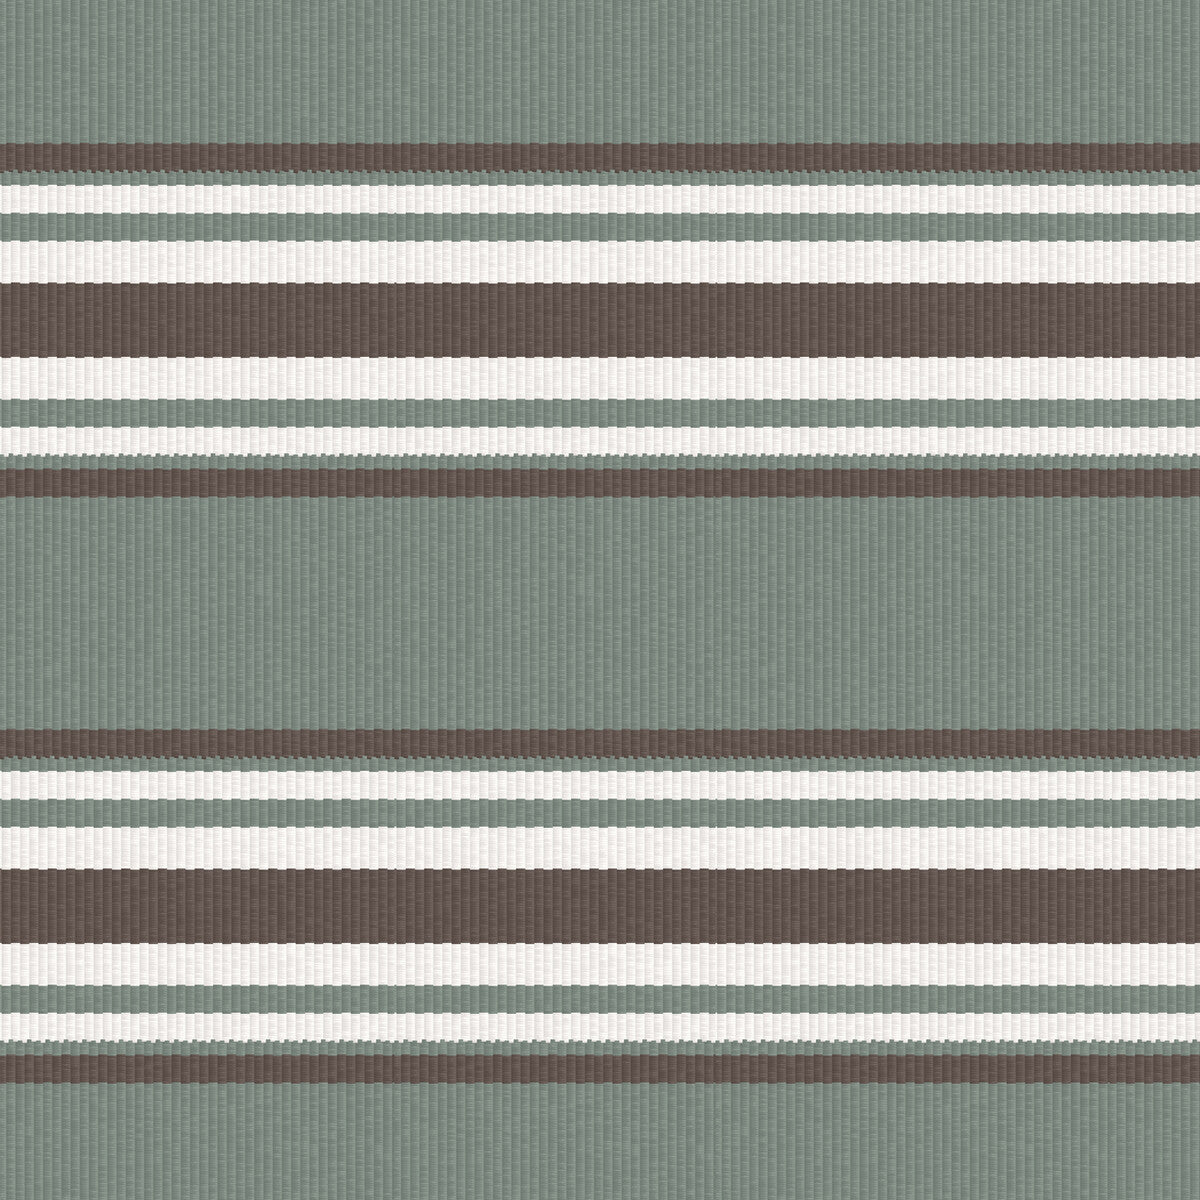 Pinilla fabric in verde/marron color - pattern LCT5463.002.0 - by Gaston y Daniela in the Lorenzo Castillo IV collection